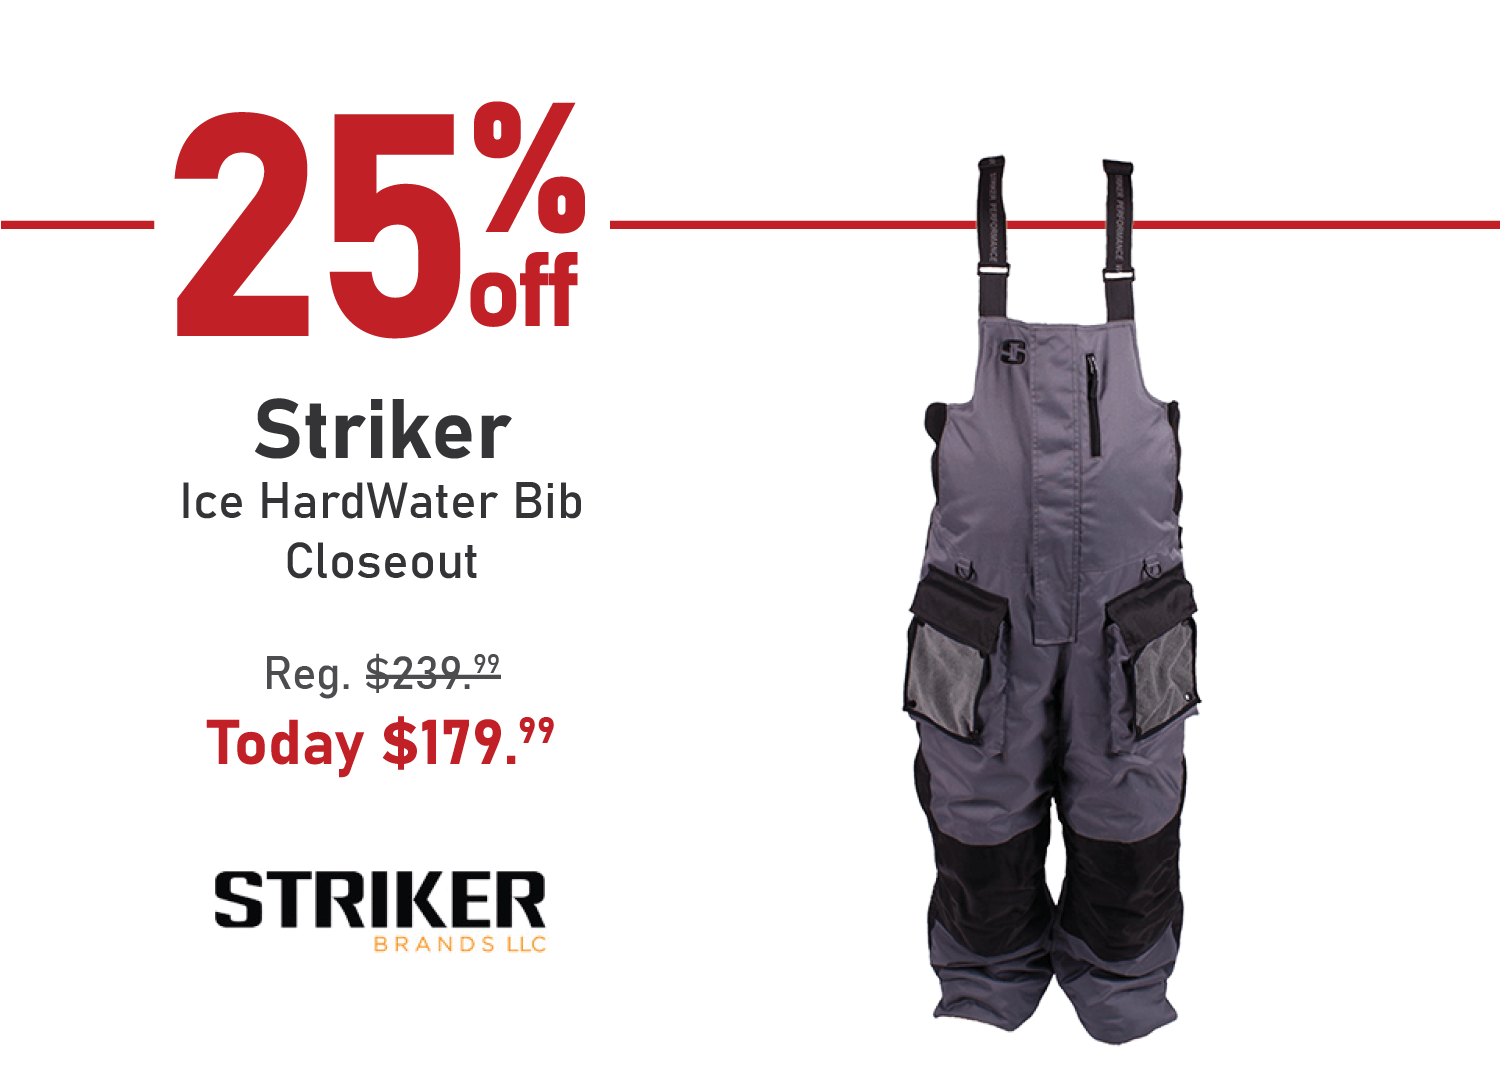 Save 25% on the Striker Ice HardWater Bib - Closeout